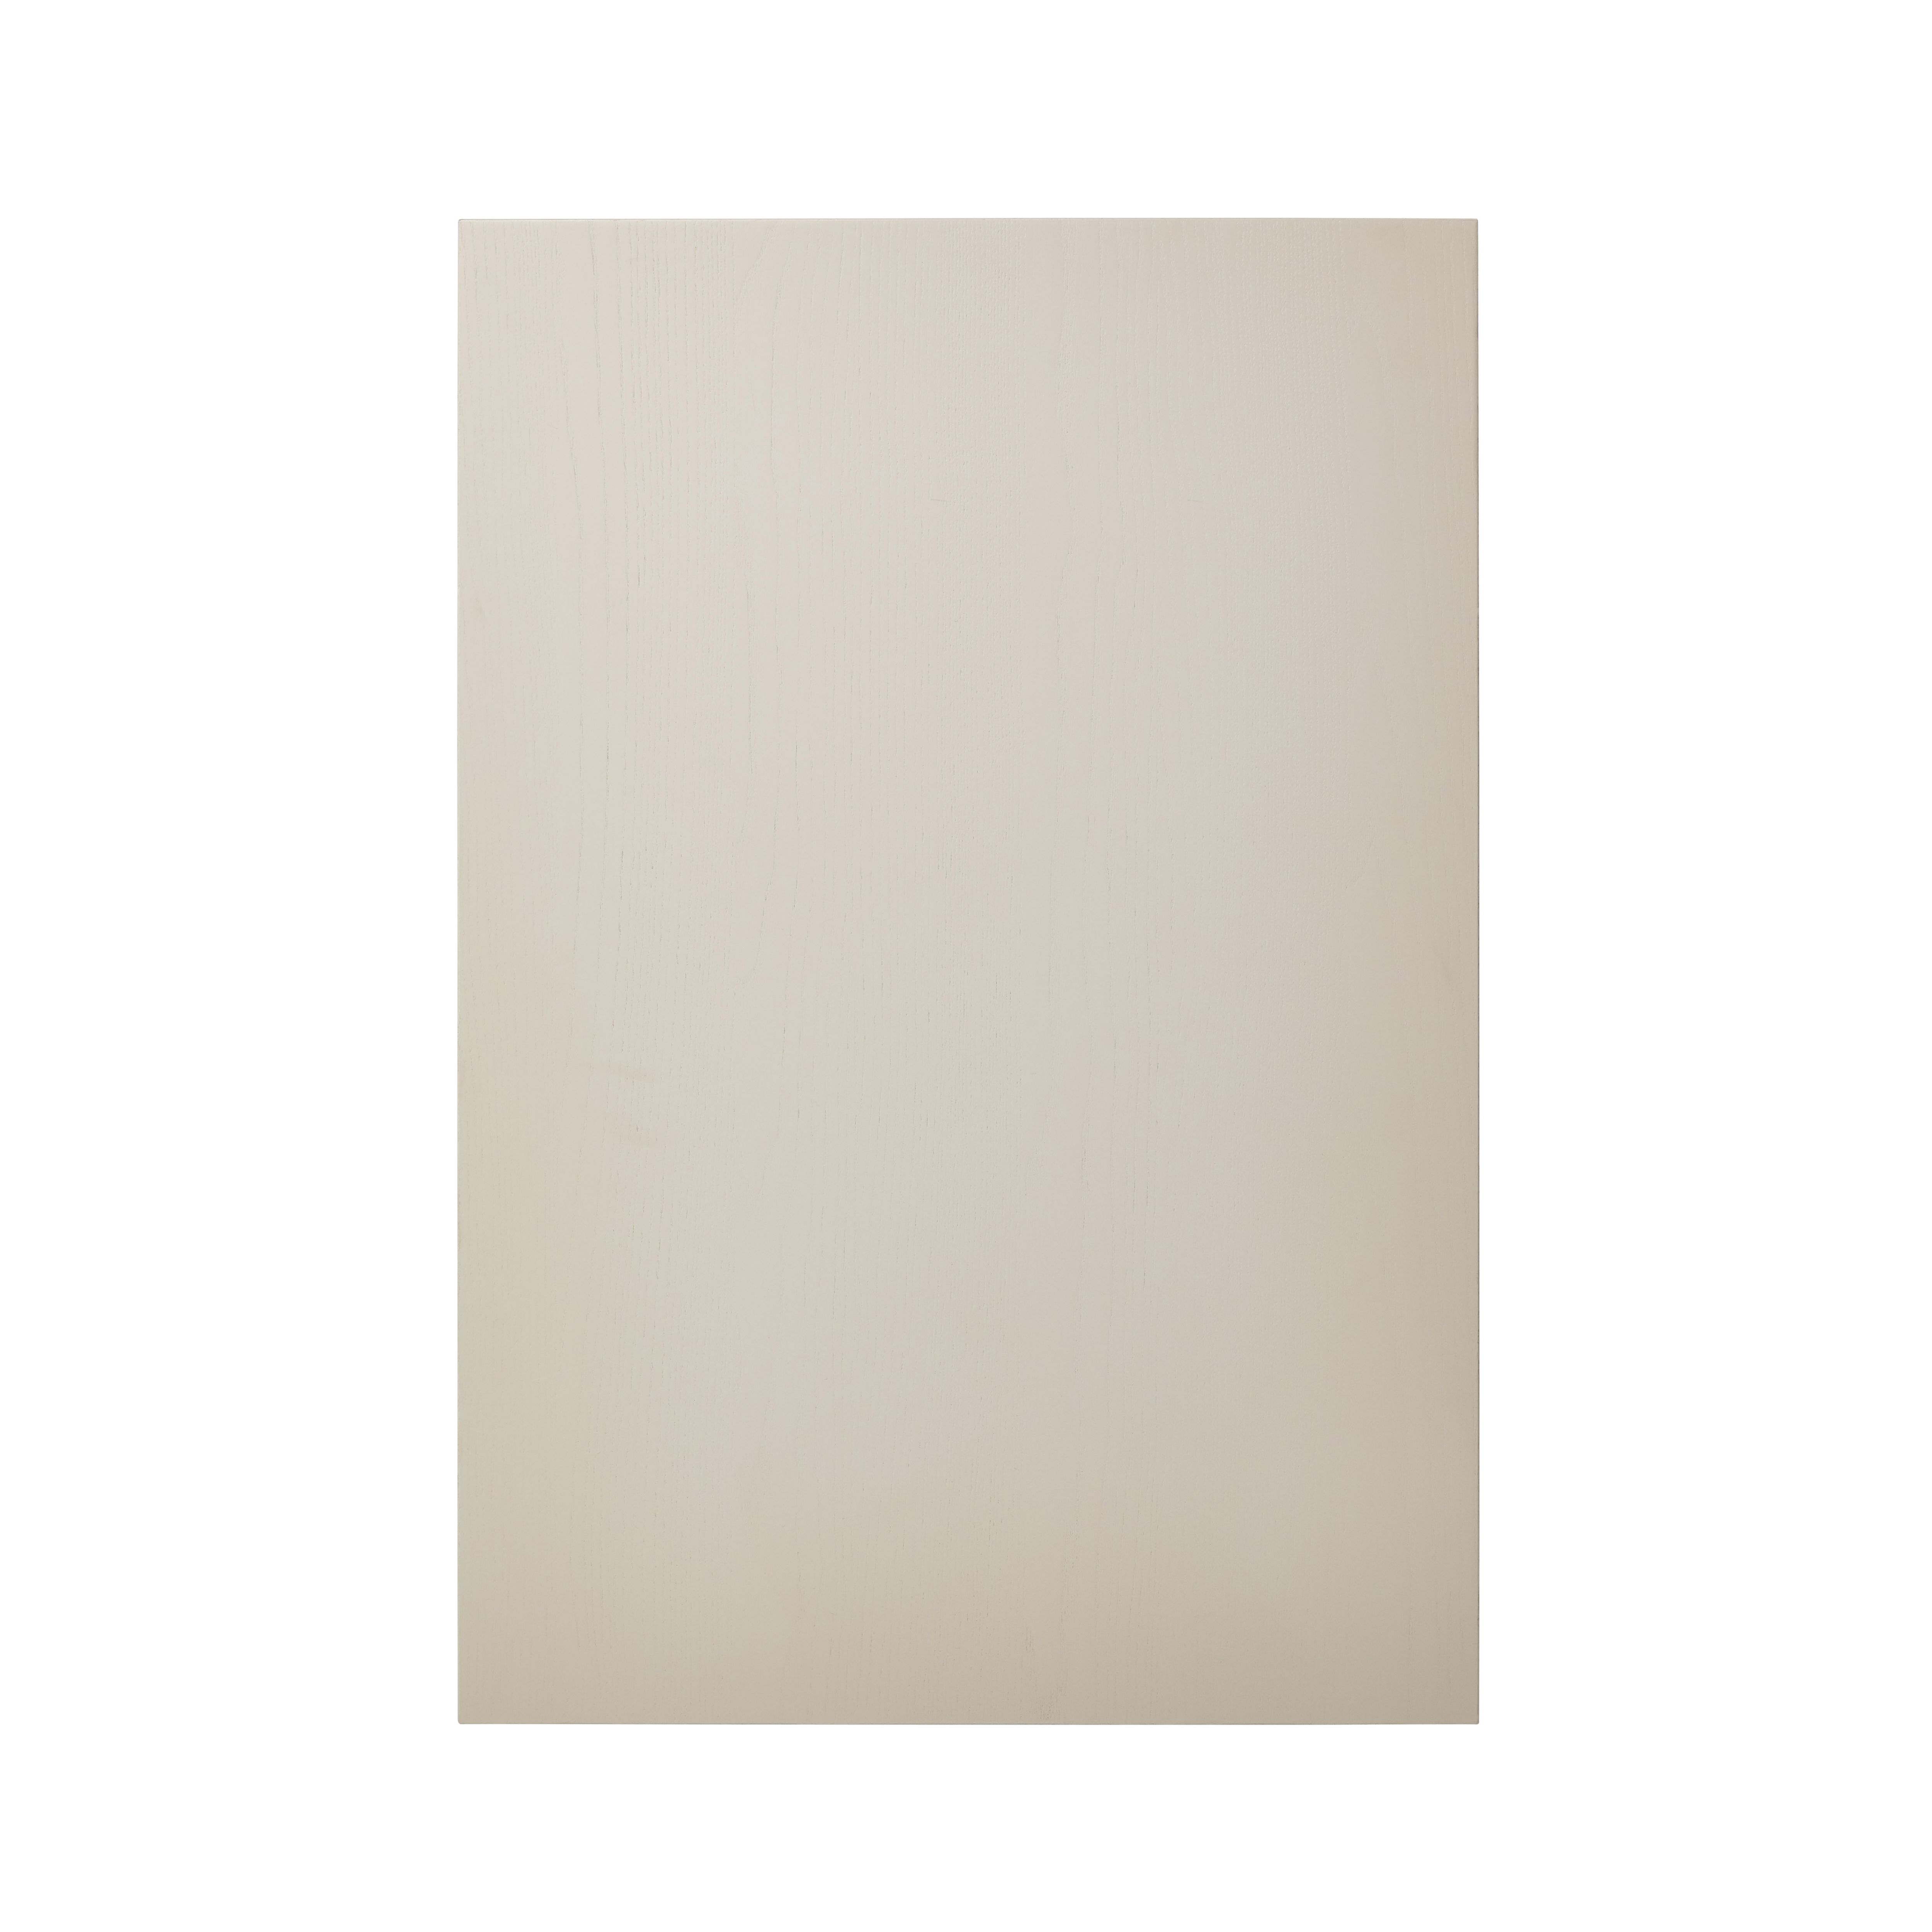 GoodHome Verbena Matt cashmere painted natural ash shaker Standard End panel (H)870mm (W)590mm